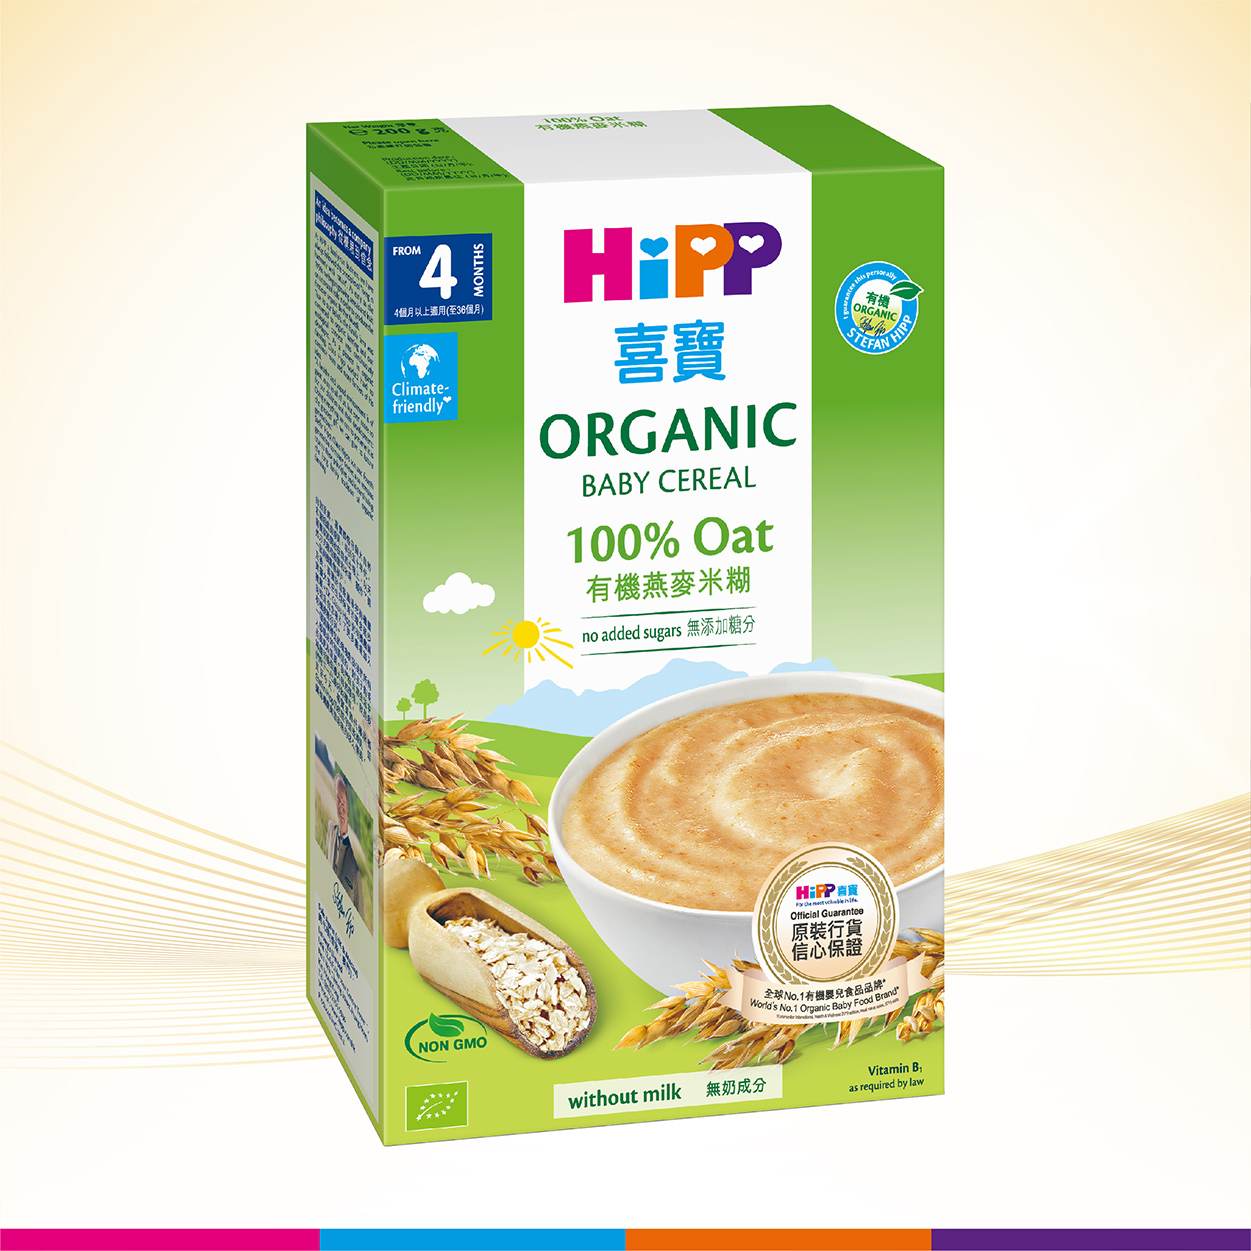 hipp-organic-baby-cereal-100-oat-200g